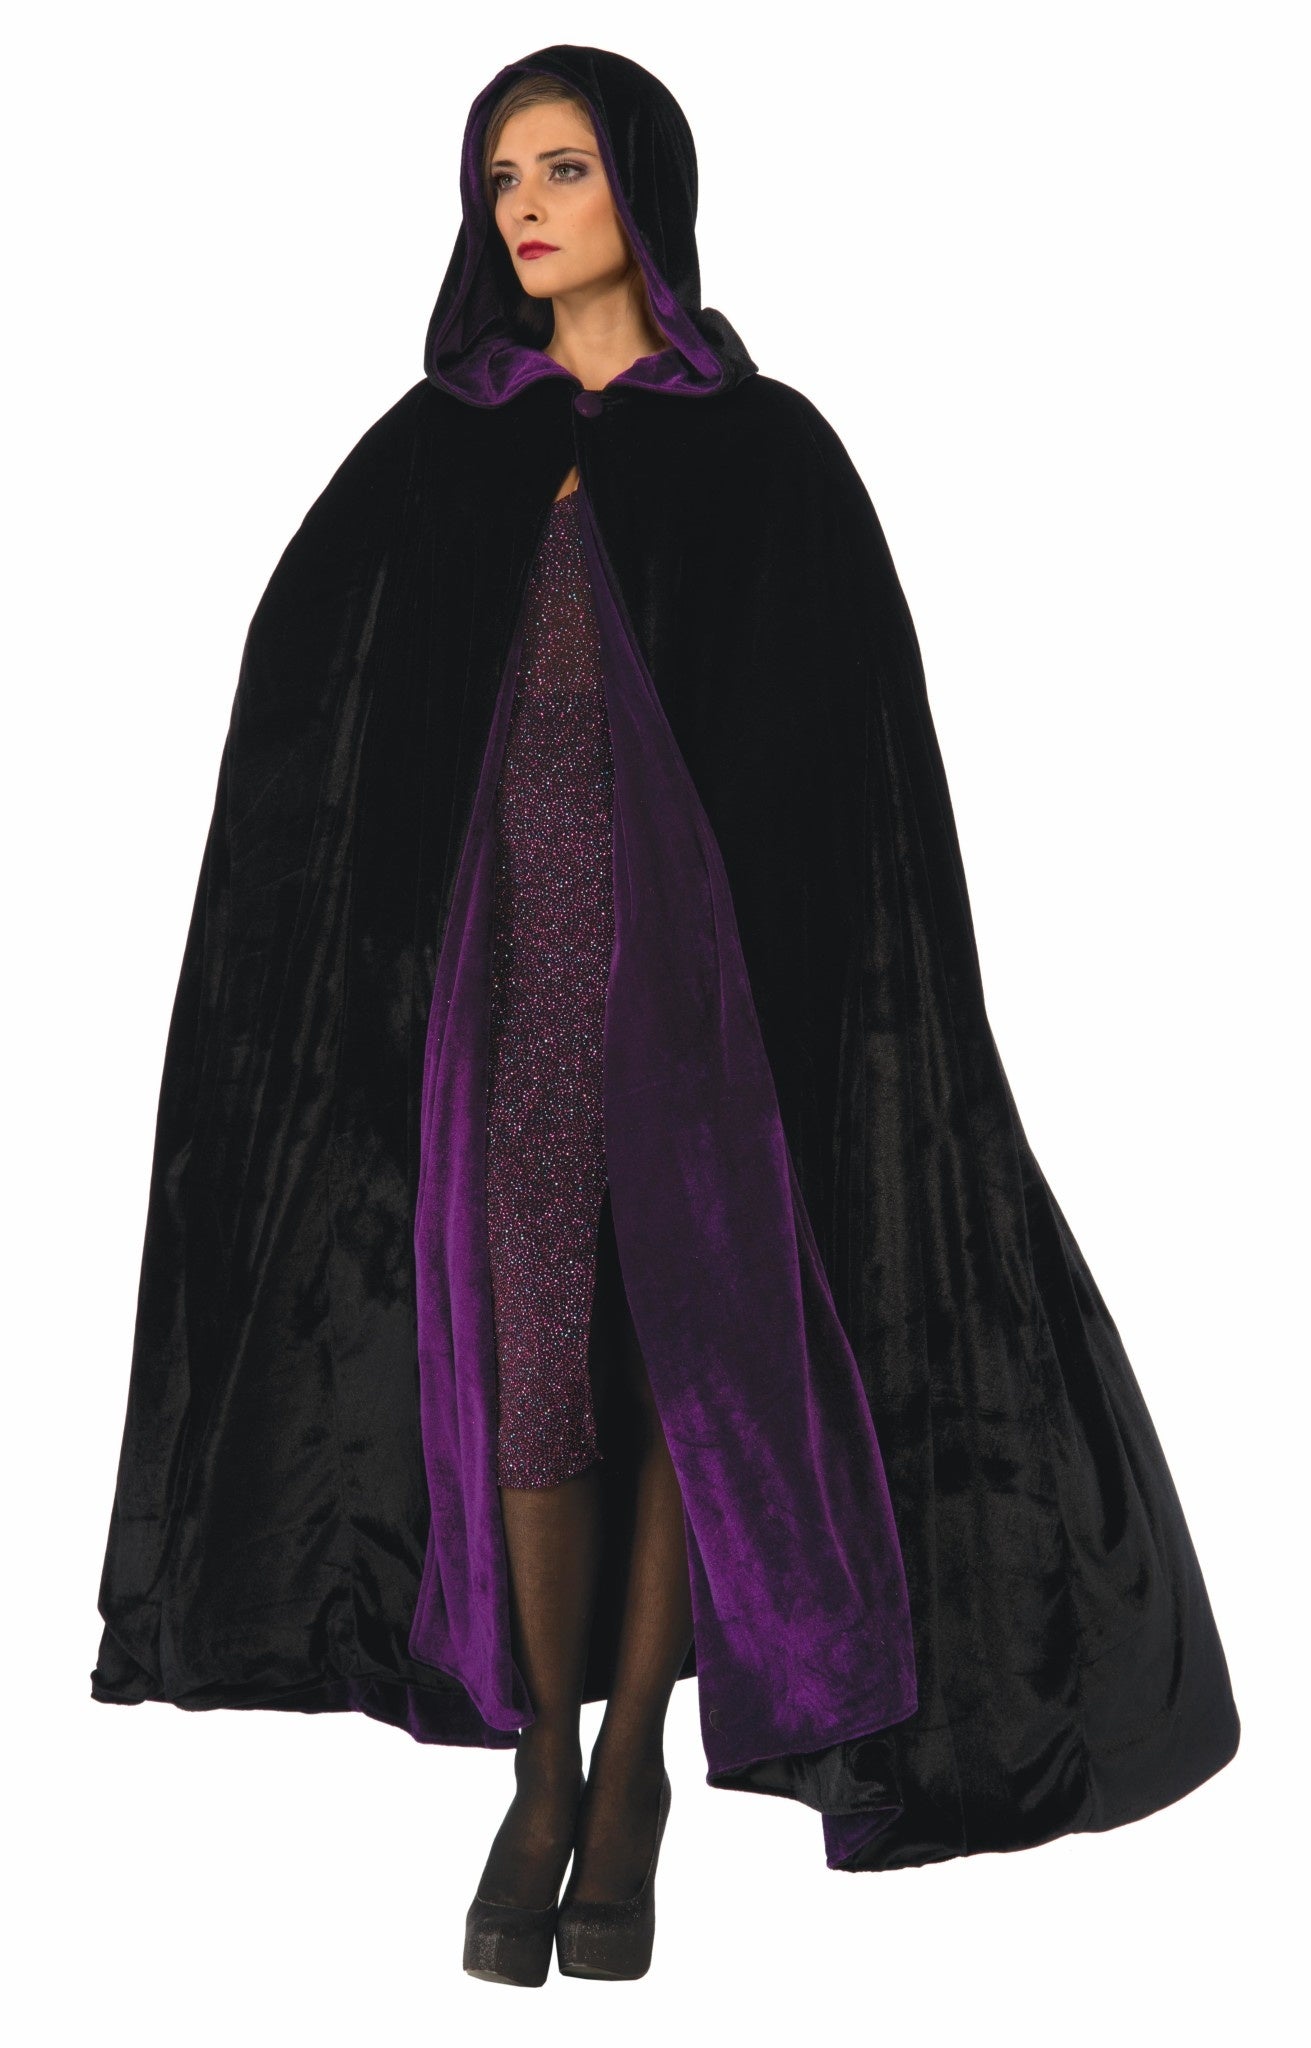 Black/Purple Reversible Cloak